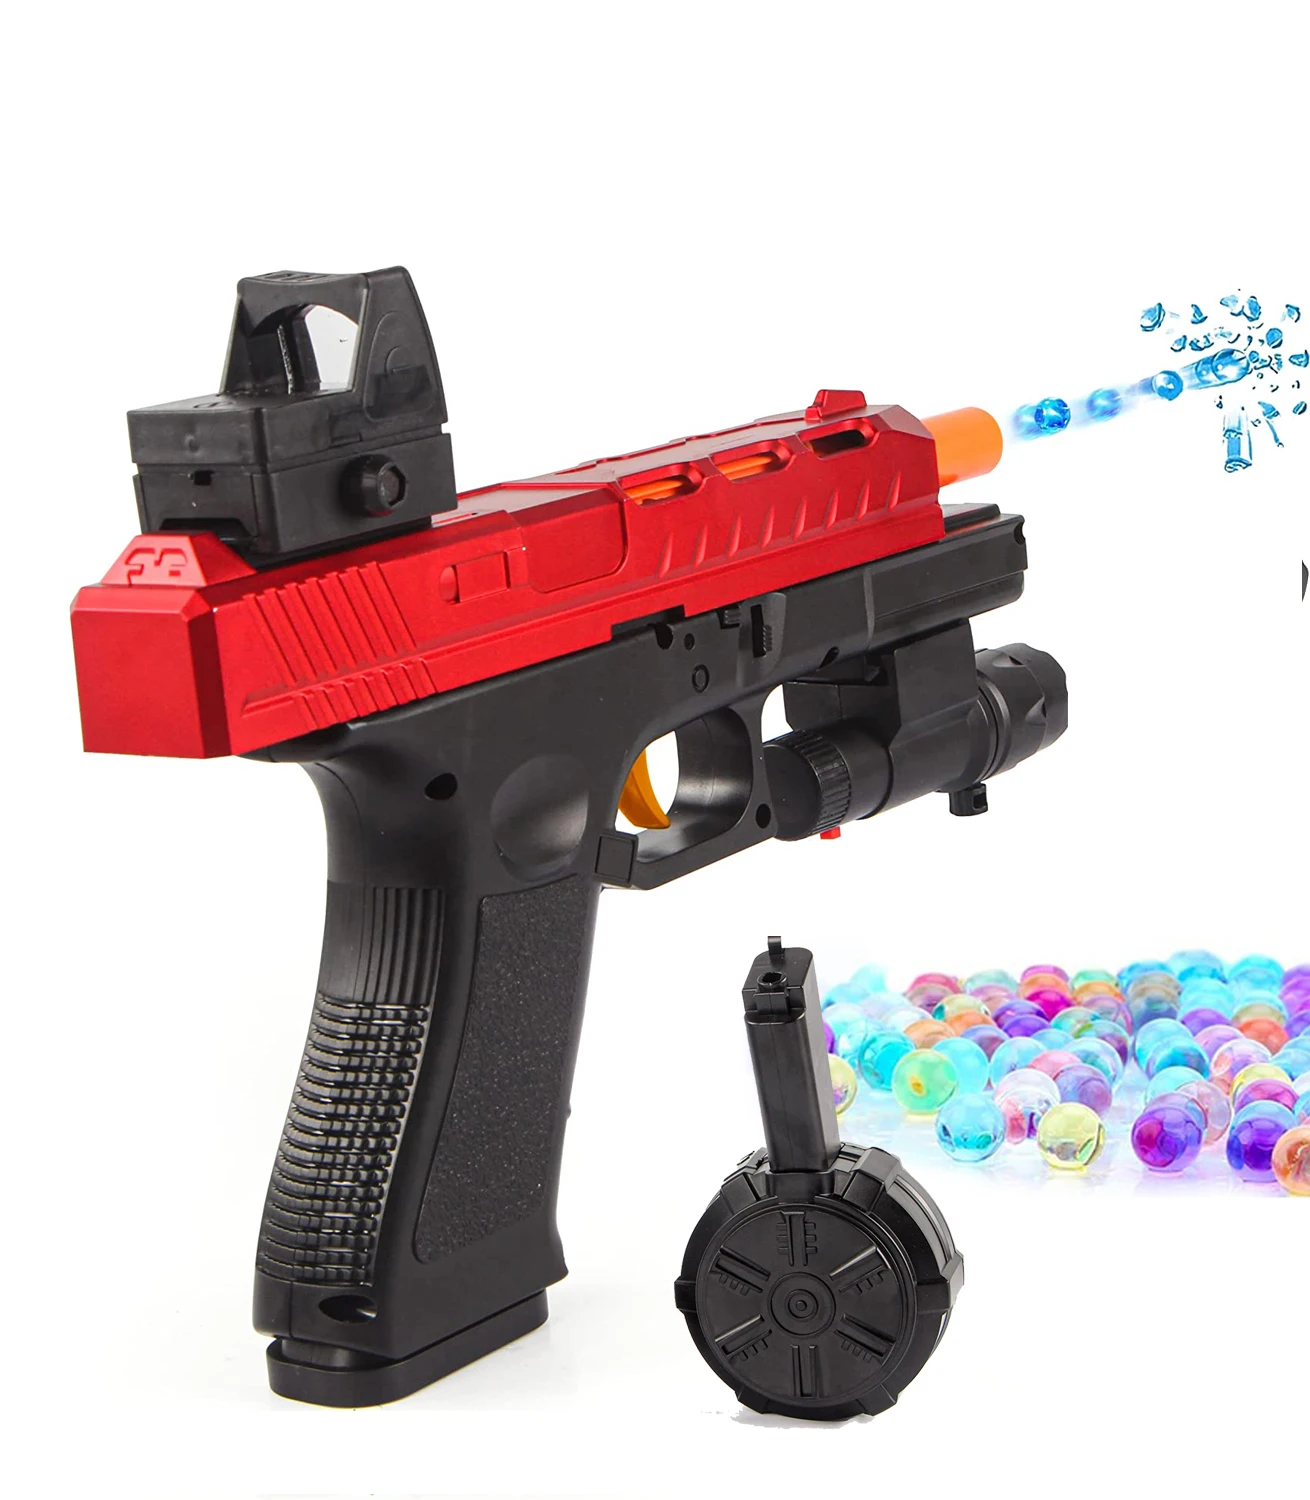 

Electric AK47 Desert Eagle Splatter Ball Gel Blaster Water Toy Gun Outdoor Activities Games Weapon Handgun Pistol For Boys